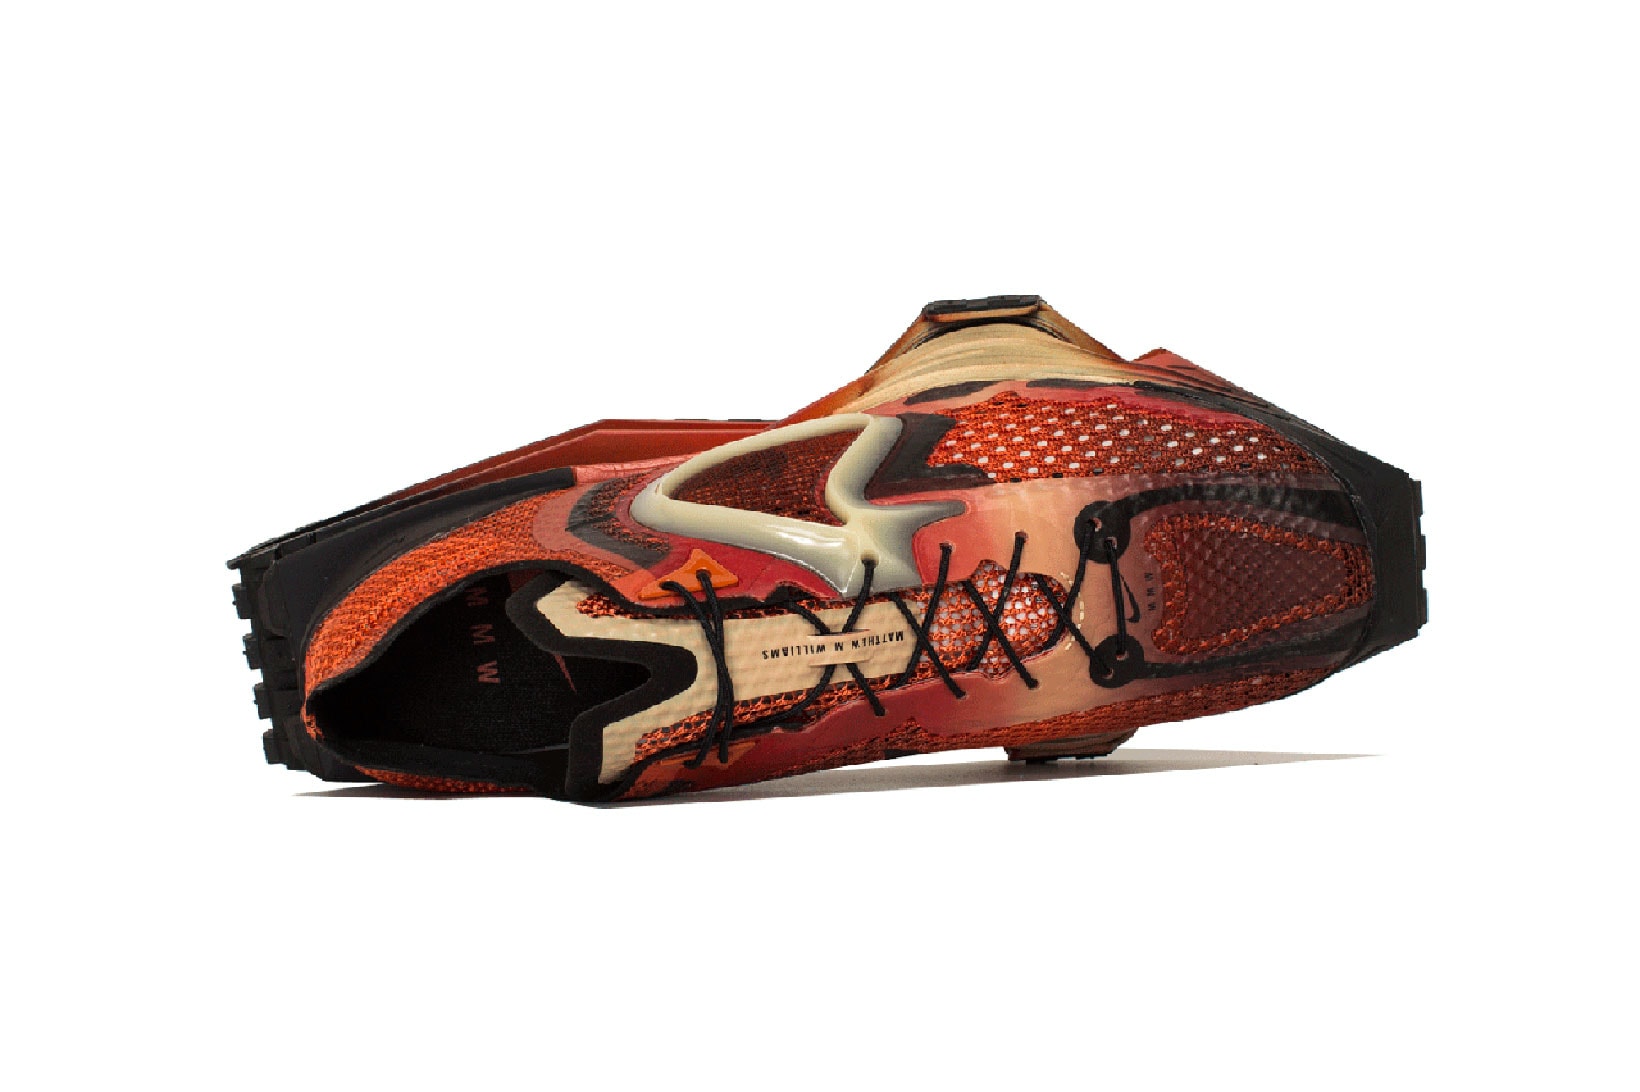 matthew williams nike zoom mmw 4 sneakers collaboration rust factor red orange footwear shoes kicks sneakerhead top